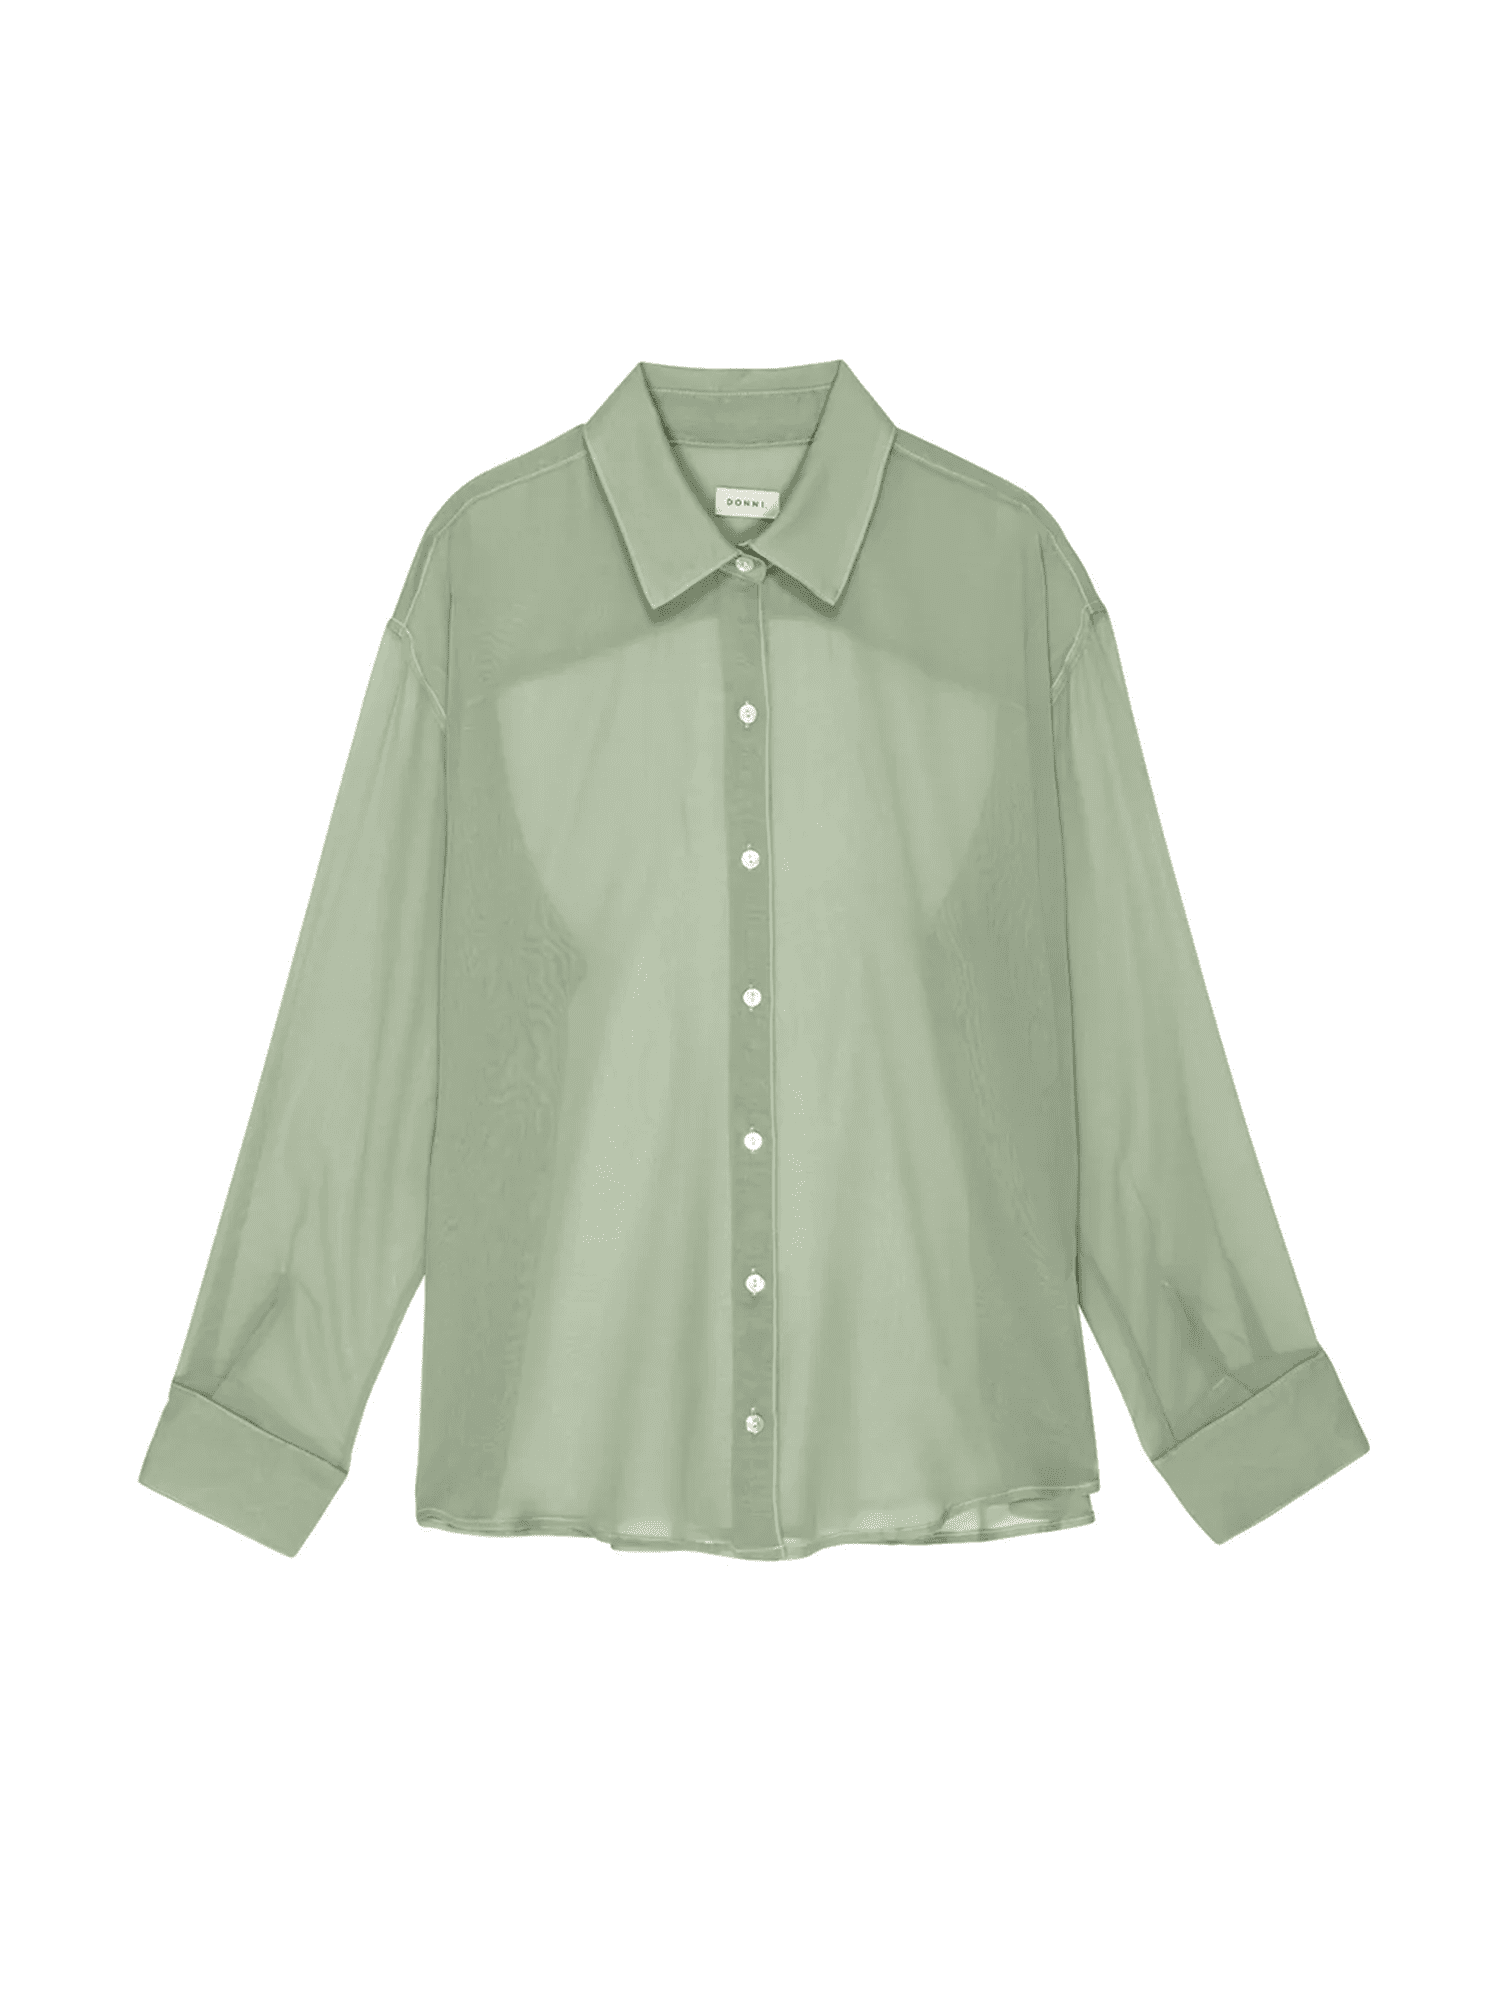 wybzd Women Sheer Mesh See Through Lapel Button Down Shirt Long Sleeve  Spring Autumn Blouse Tops Green XL 